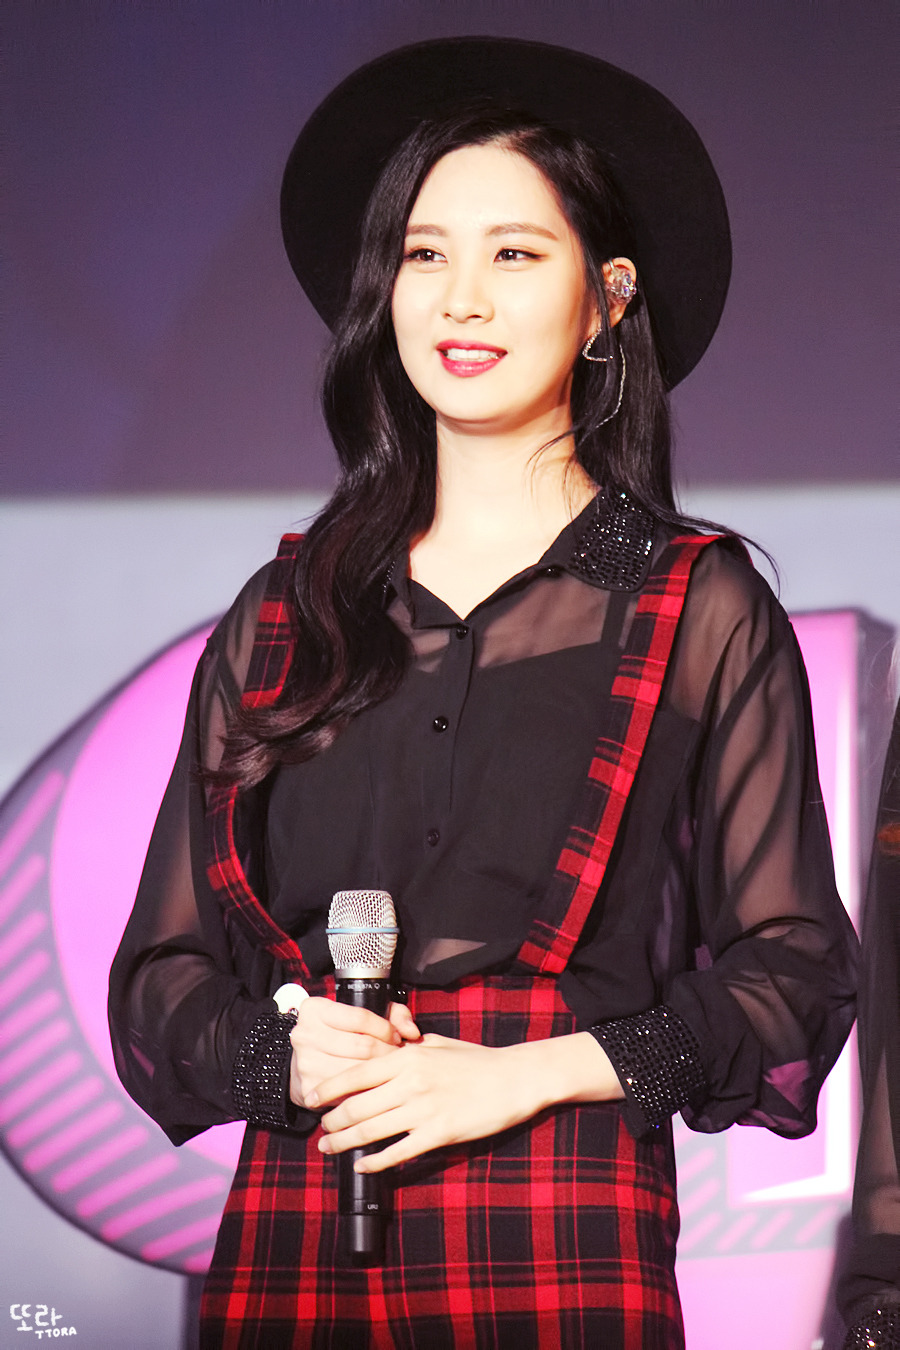 [PIC][11-11-2014]TaeTiSeo biểu diễn tại "Passion Concert 2014" ở Seoul Jamsil Gymnasium vào tối nay - Page 5 2323DF3F5467381A1DB47F